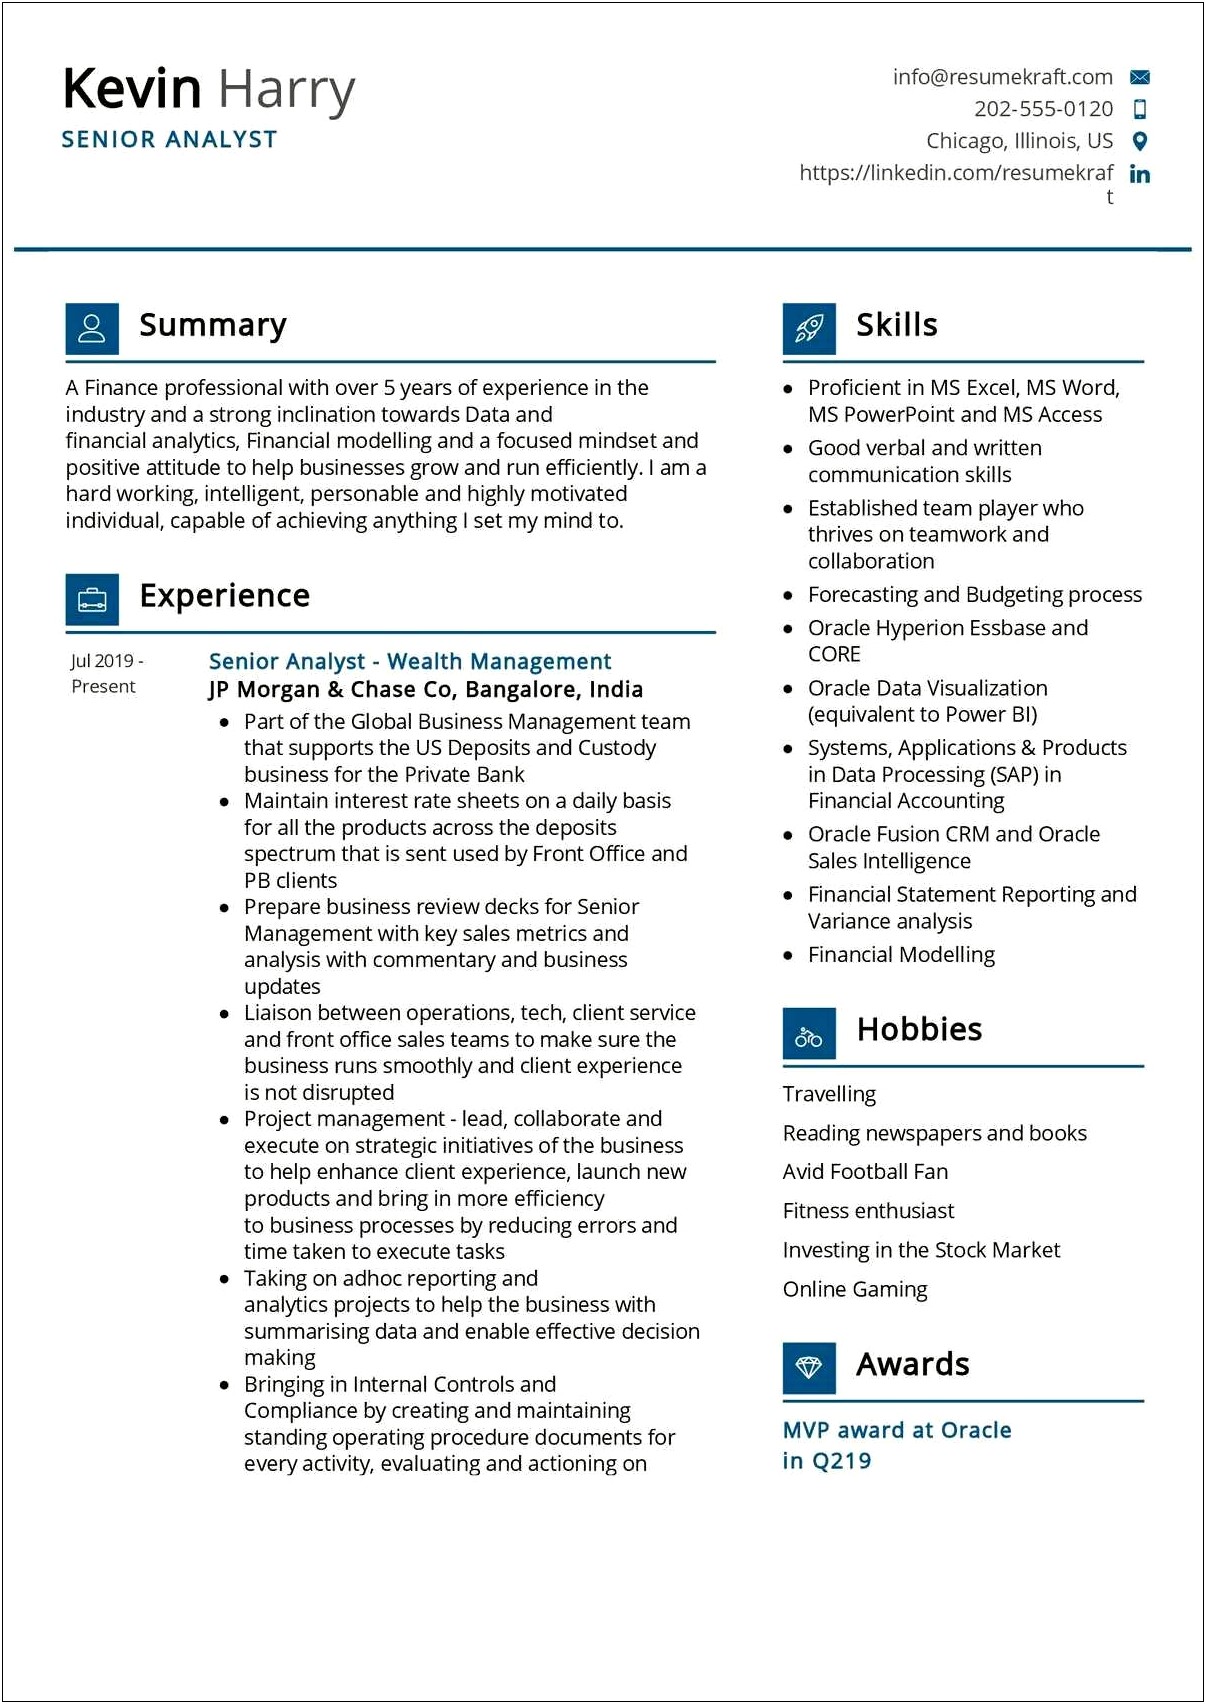 Senior Financial Analyst Fp&a Sample Resume